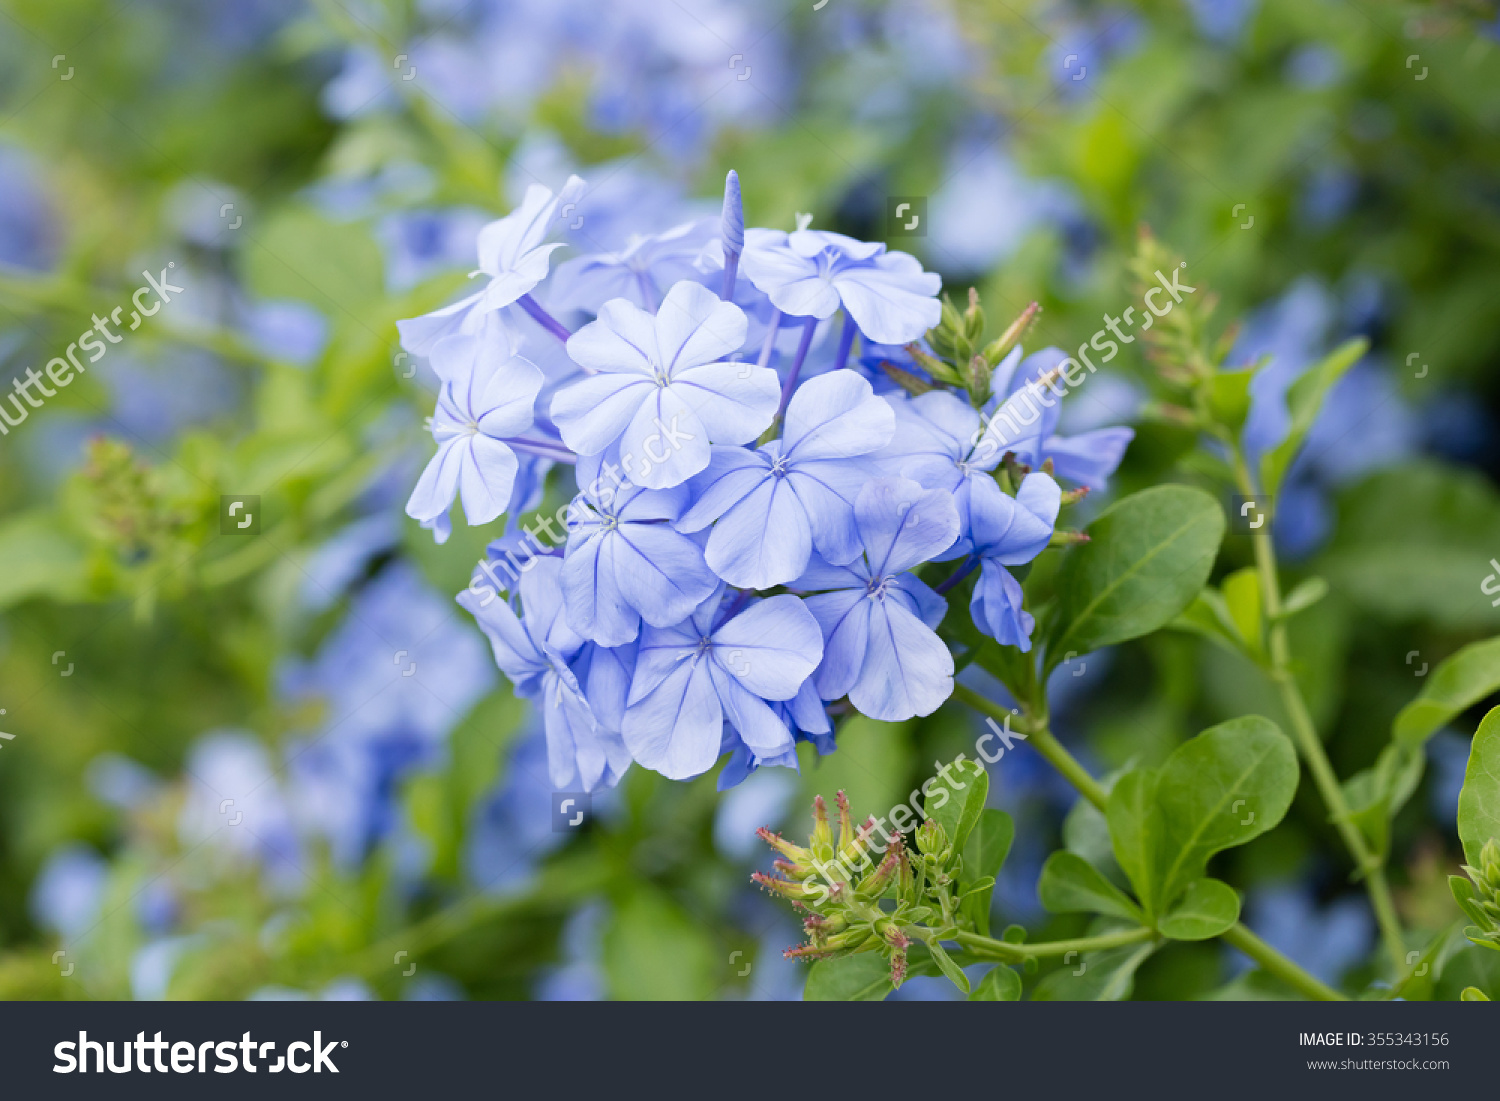 Close Up Blue Color Plumbago Or Plumbaginaceae Flower In Garden.